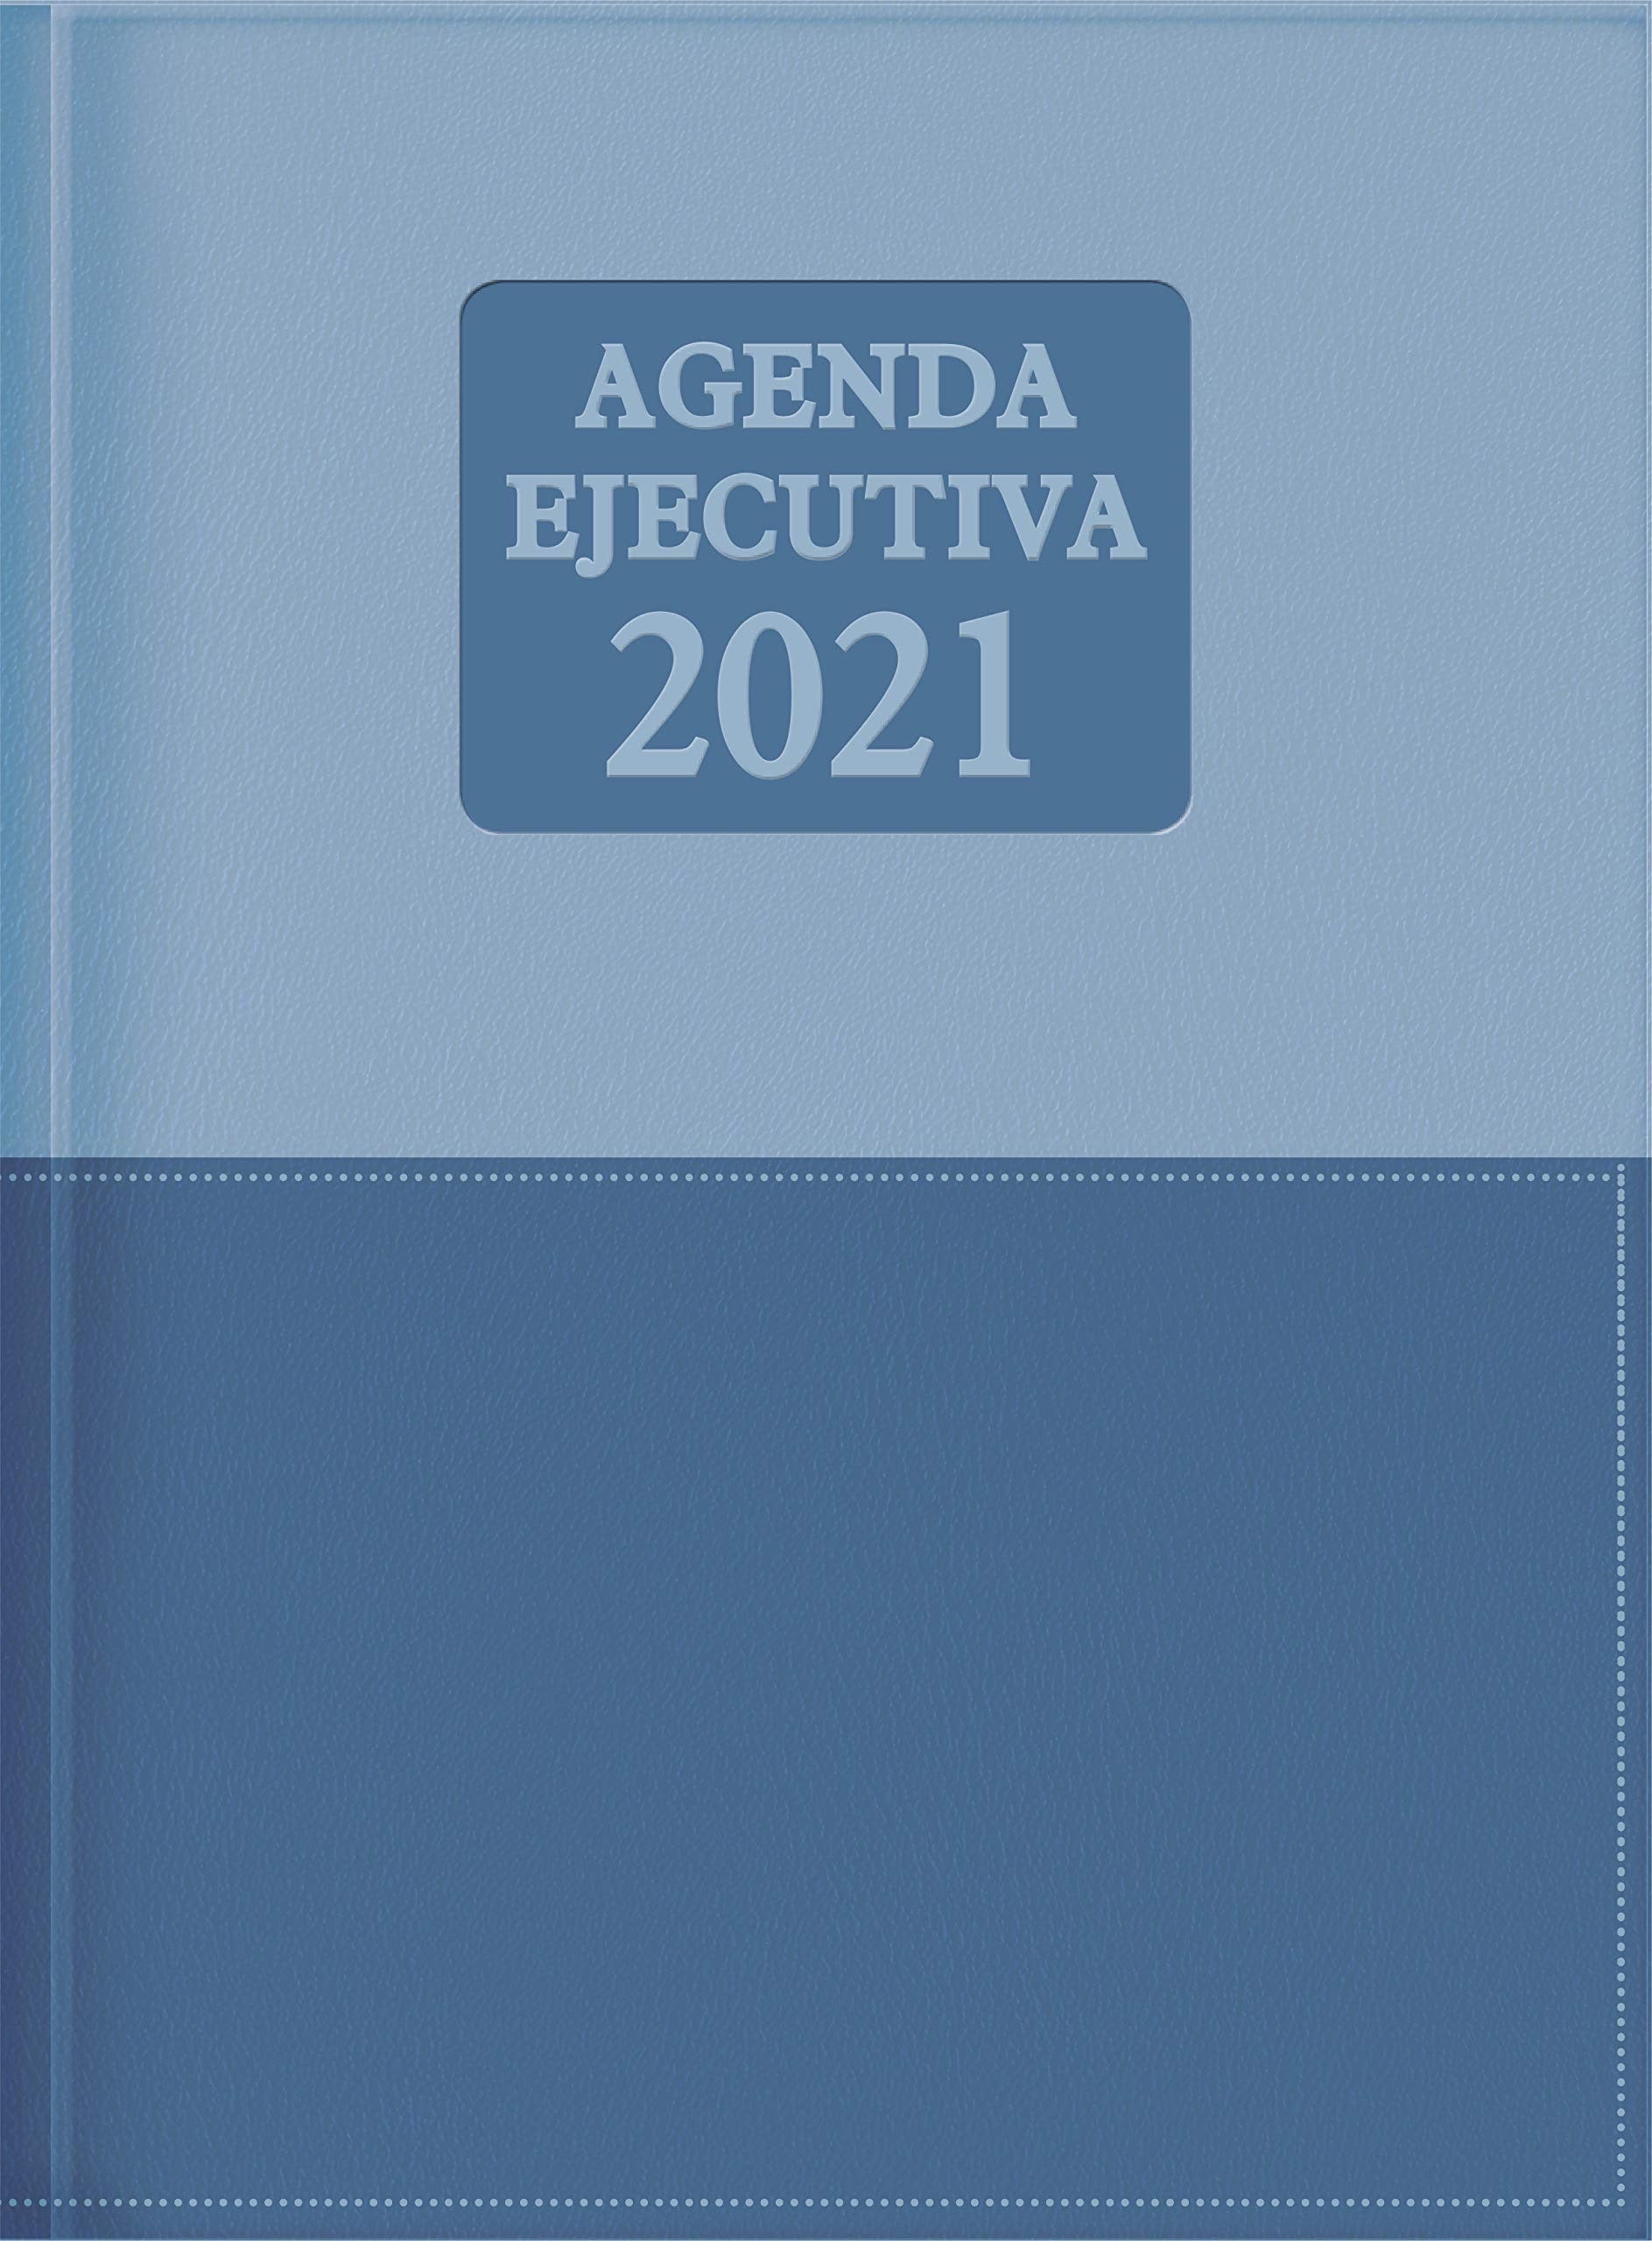 Agenda ejecutiva 2021/ Azul celeste/ Tesoros de Sabiduria